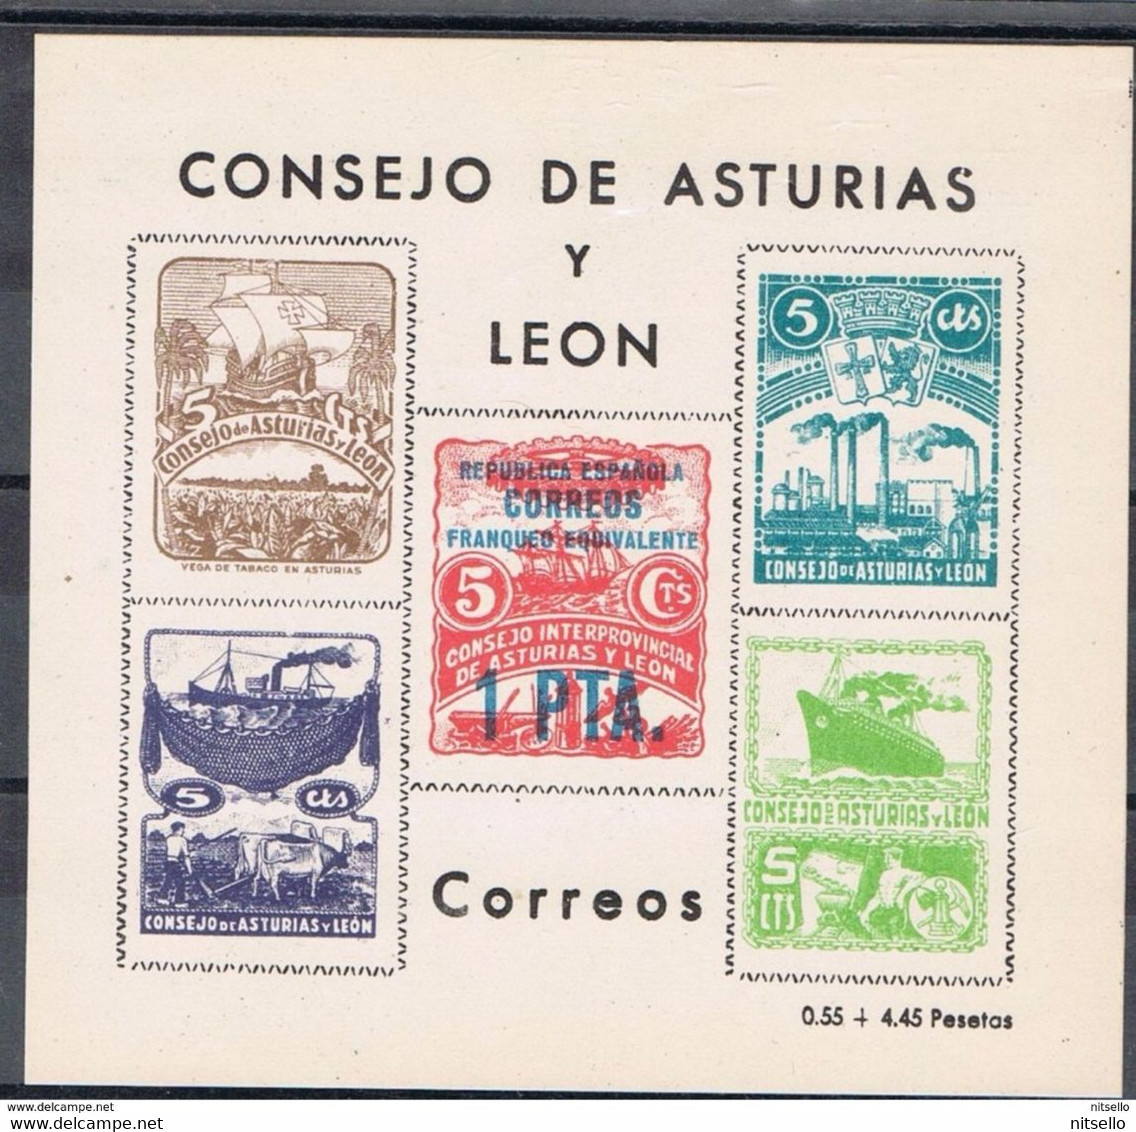 LOTE 1385  ///  CONSEJO DE ASTURIAS Y LEON          ¡¡¡¡¡¡ LIQUIDATION !!!!!!! - Asturië & Leon